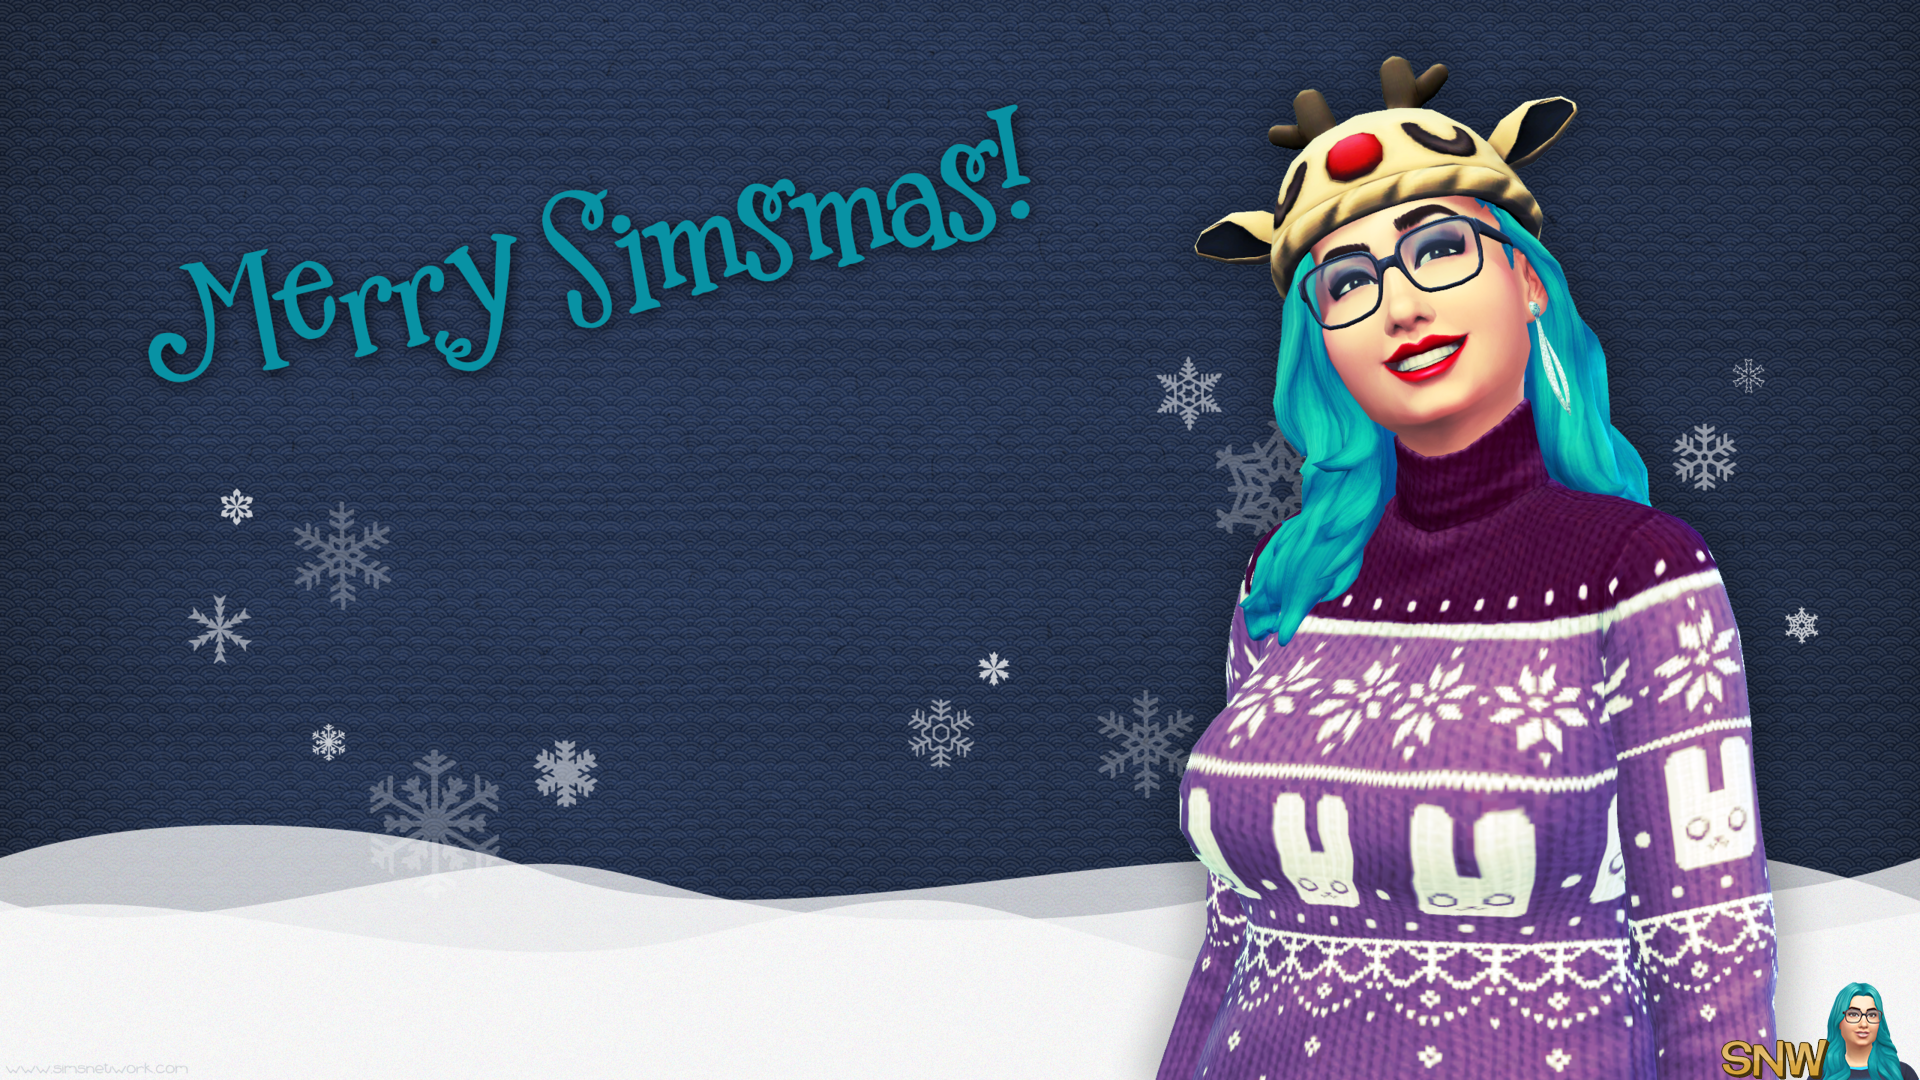 Merry Simsmas 2015 Christmas wallpaper